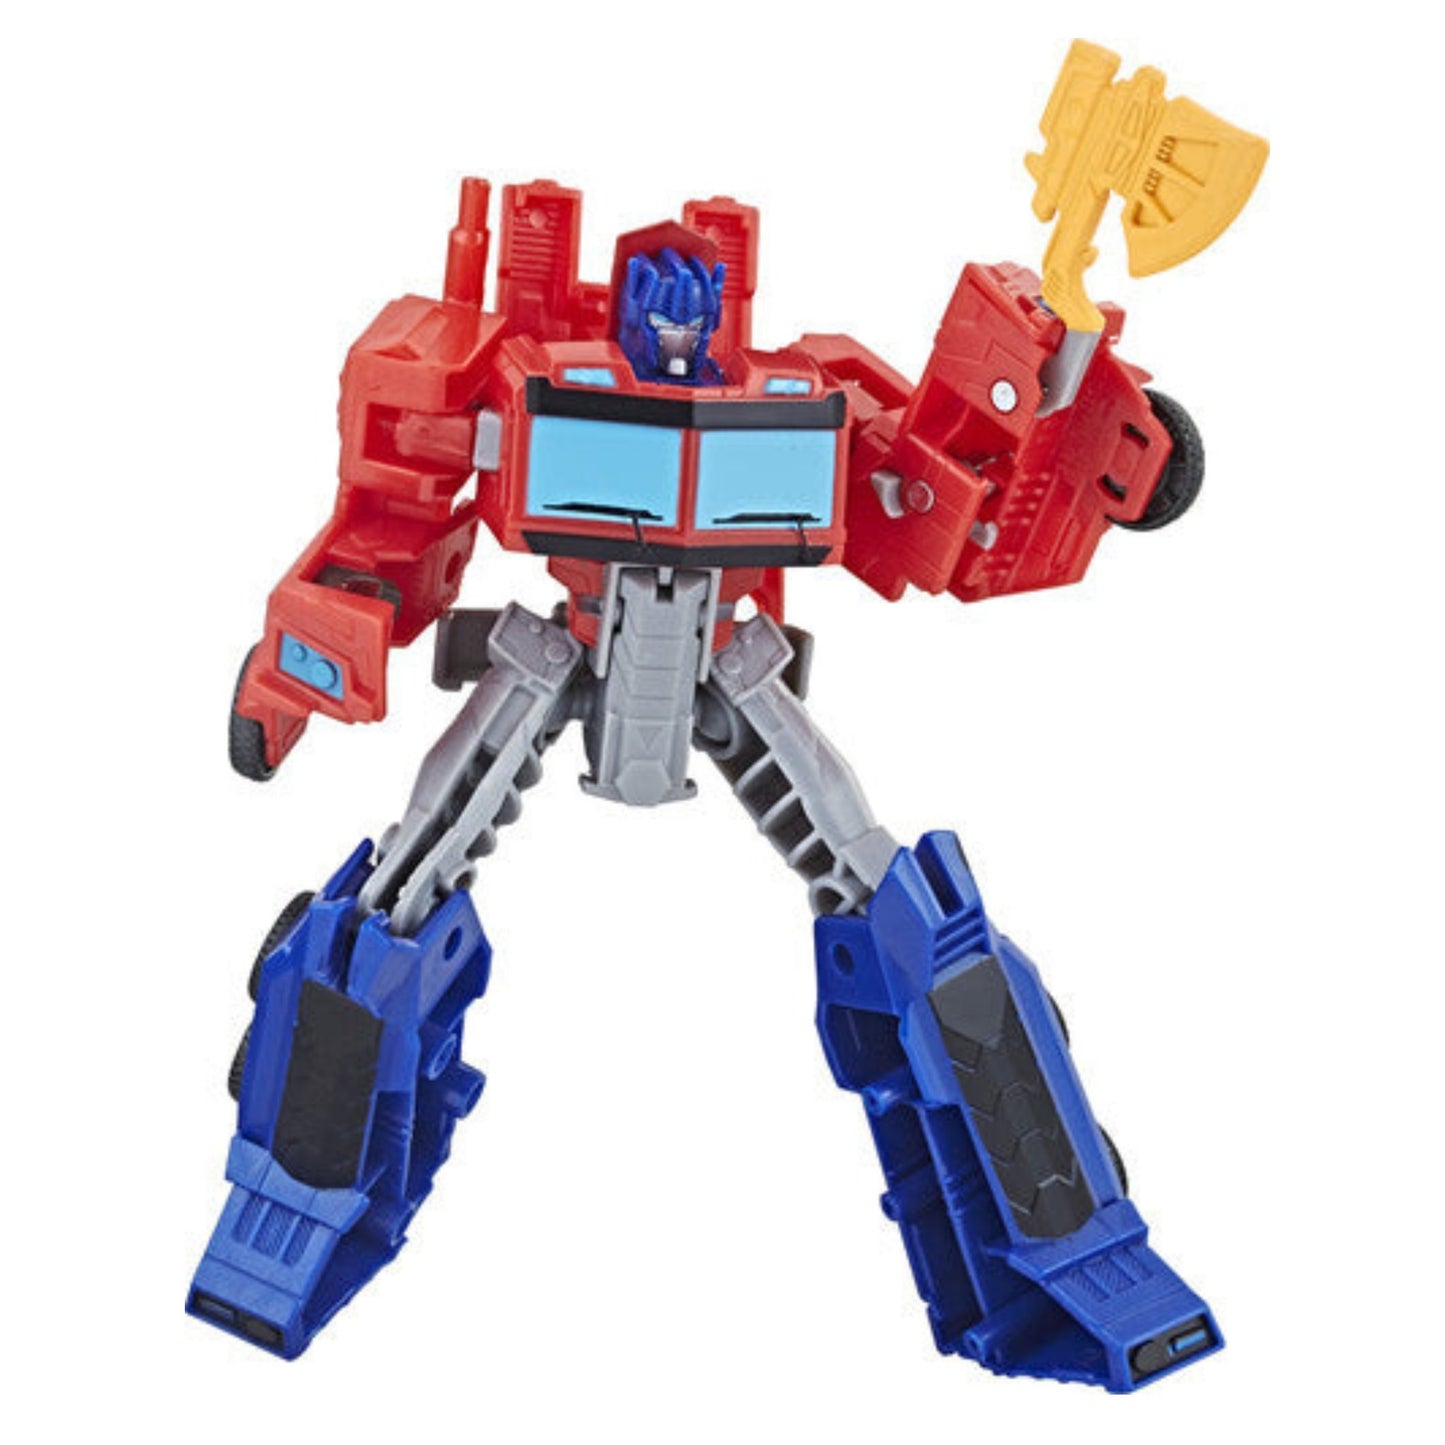 Transformers-Transformers Cyberverse Warrior Class Optimus Prime - Brandat Outlet